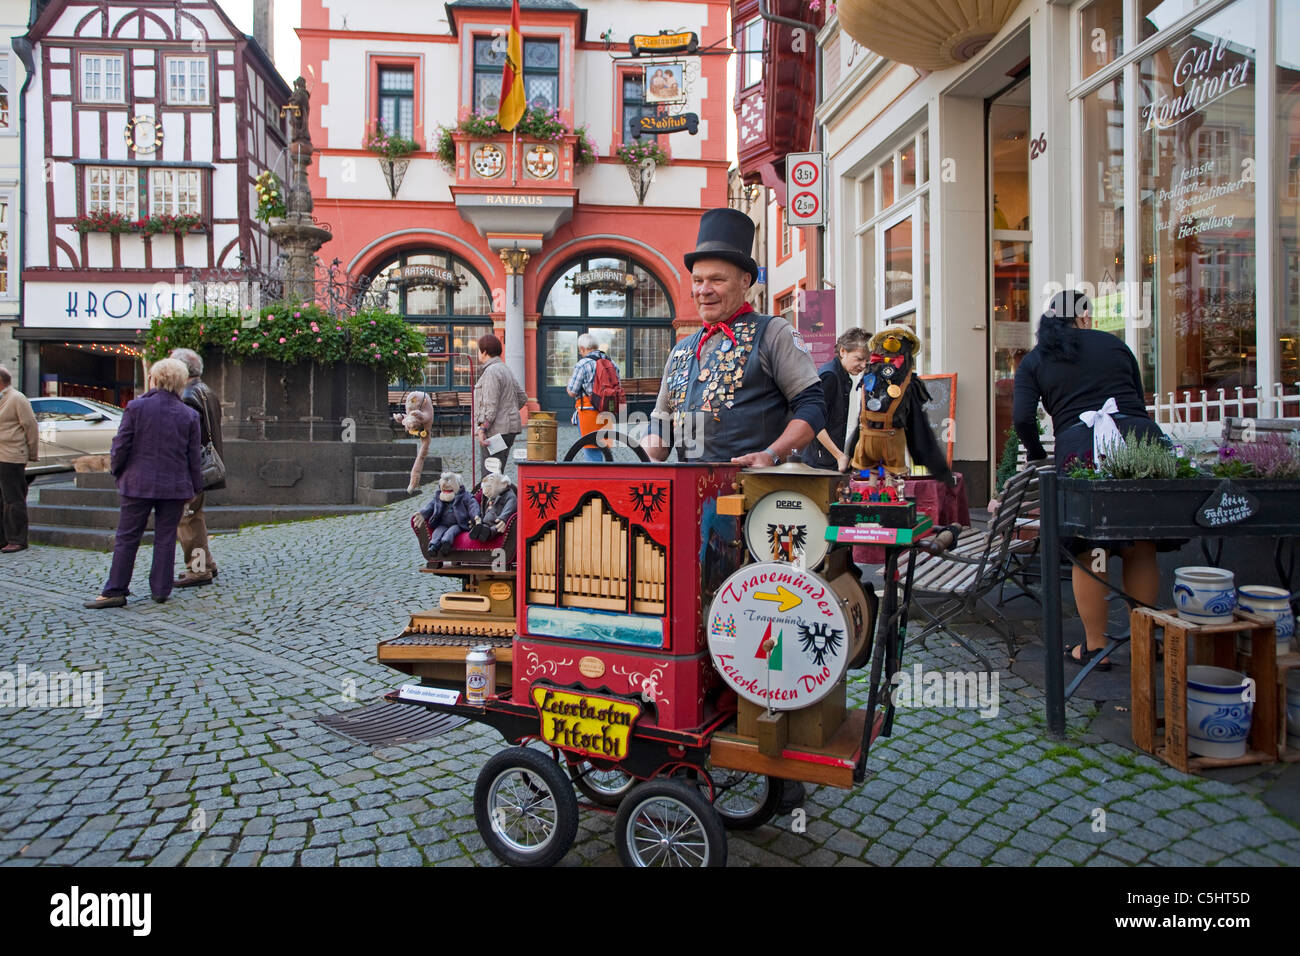 Hurdy-gurdy player, barrel organ, street musican, market square, market place, old town, Bernkastel-Kues, Mosel river, Rhineland-Palatinate, Germany Stock Photo